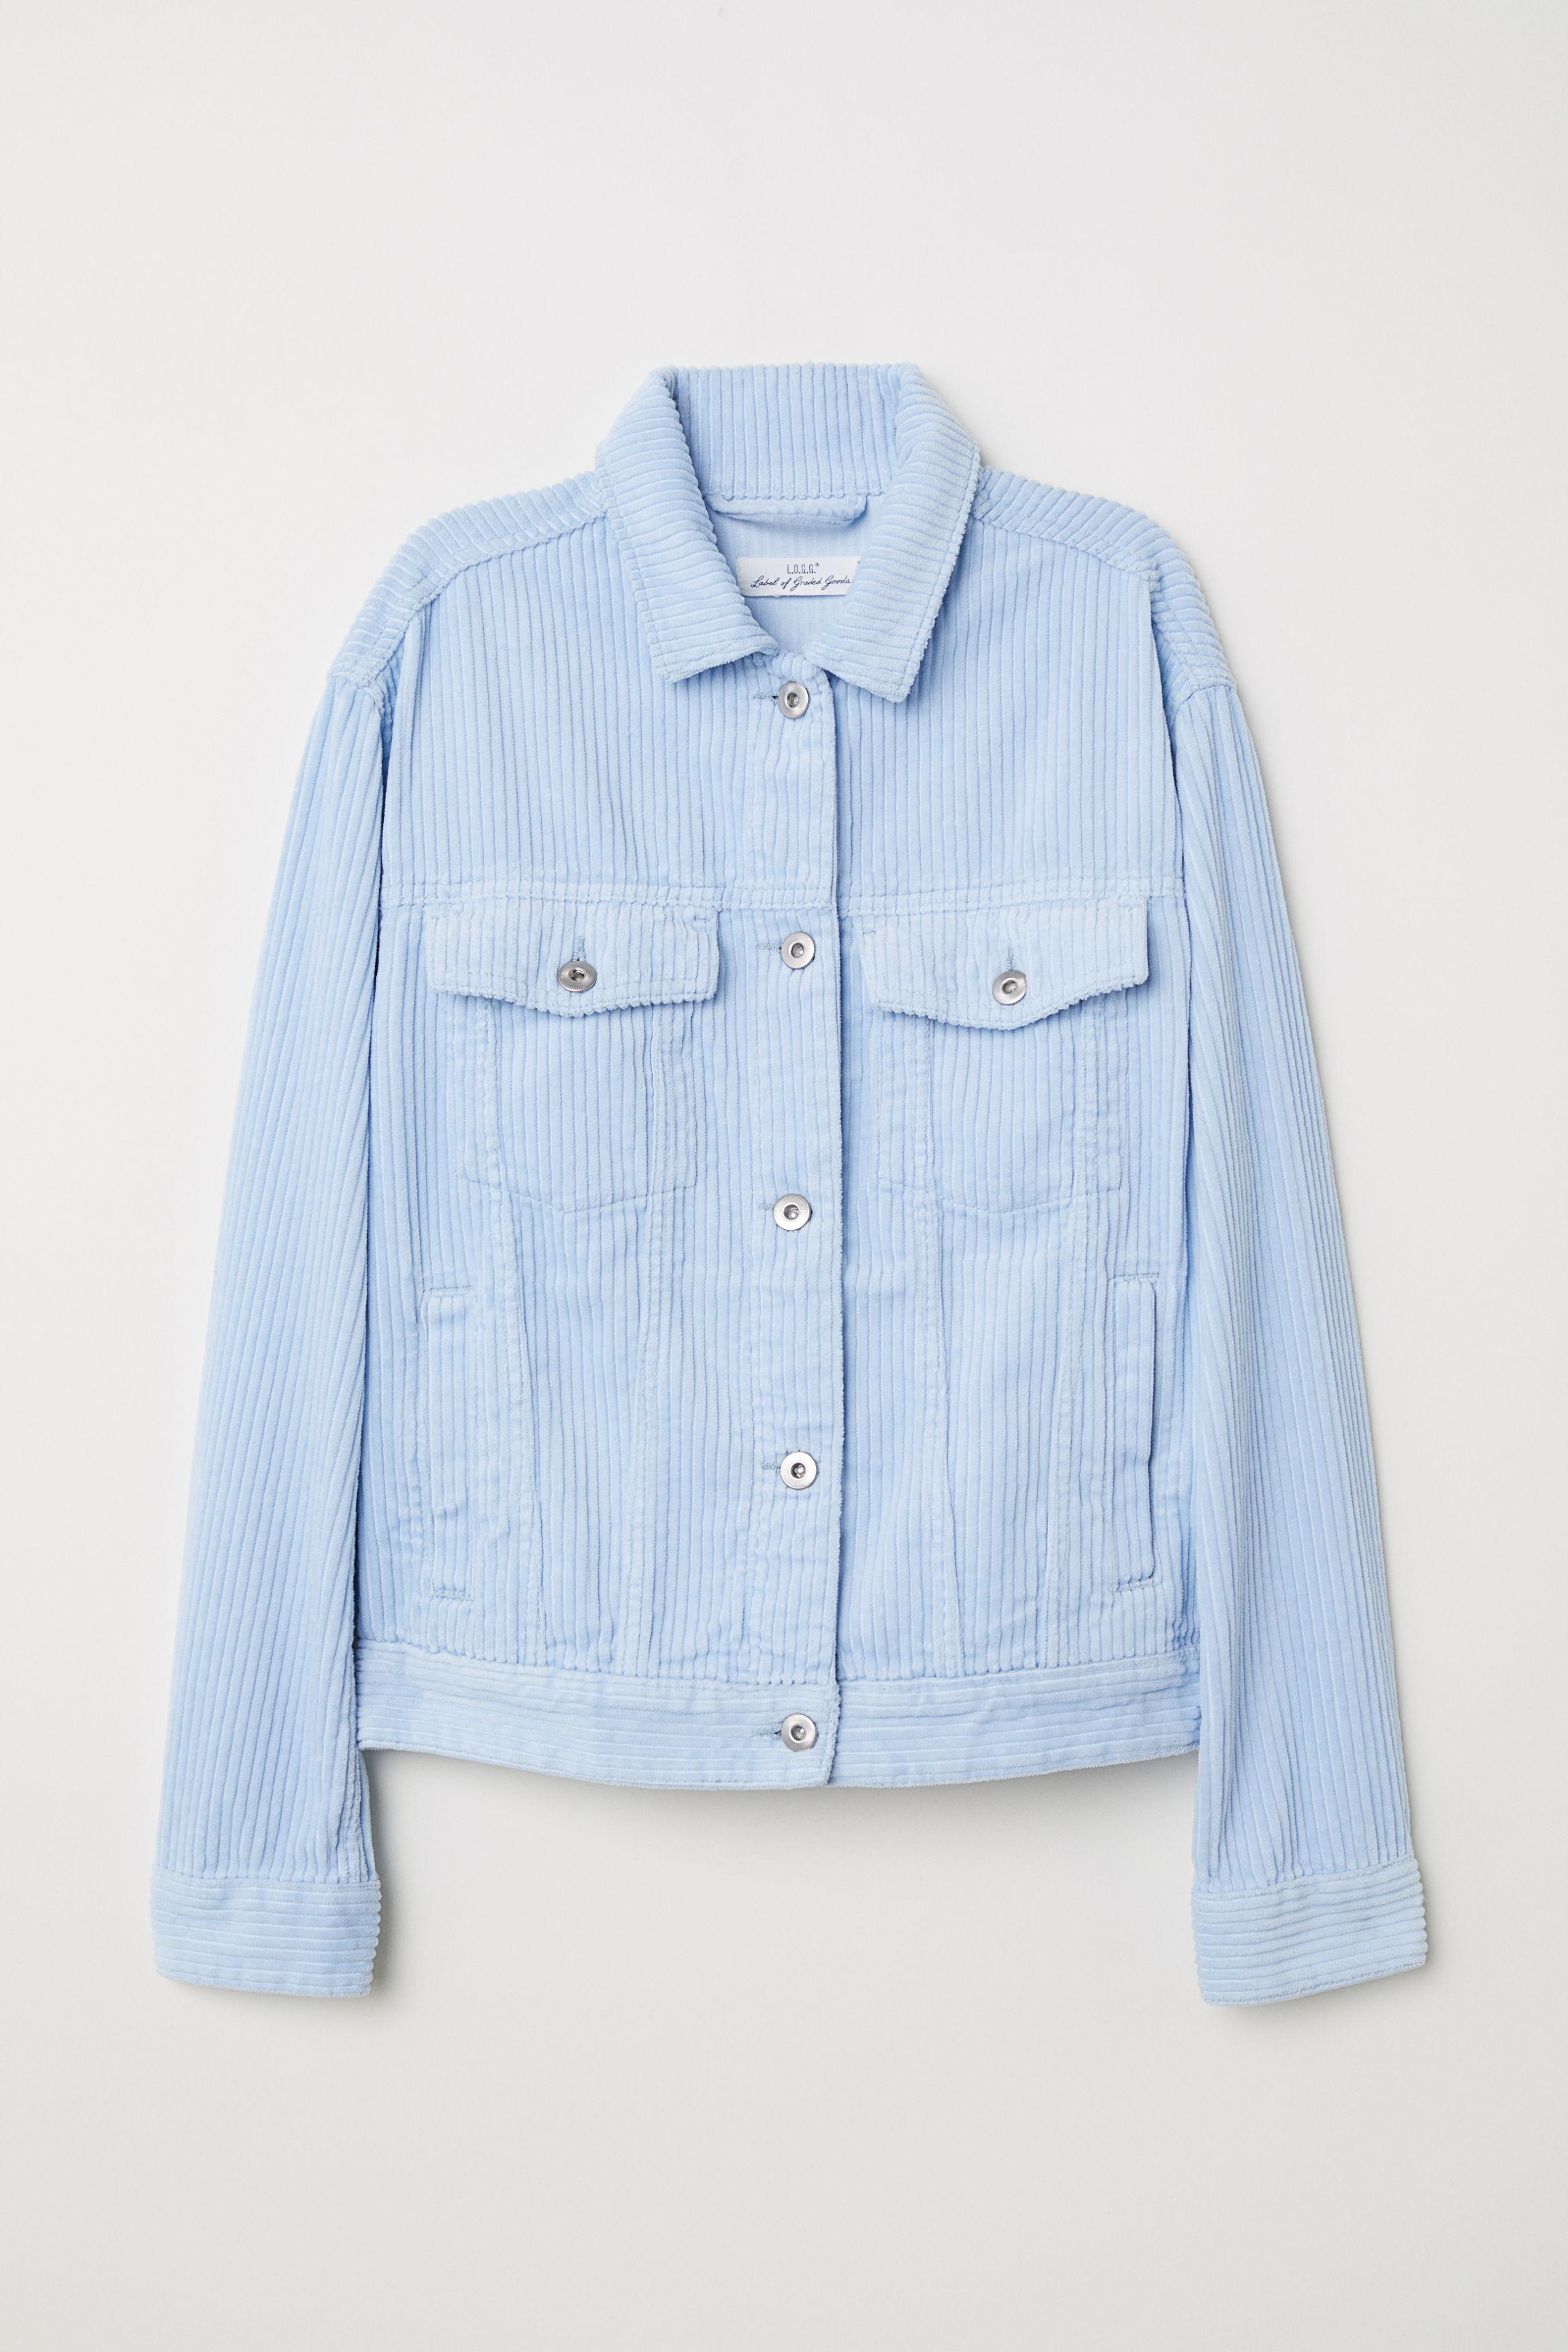 H&M Cotton Corduroy Jacket in Light Blue (Blue) | Lyst